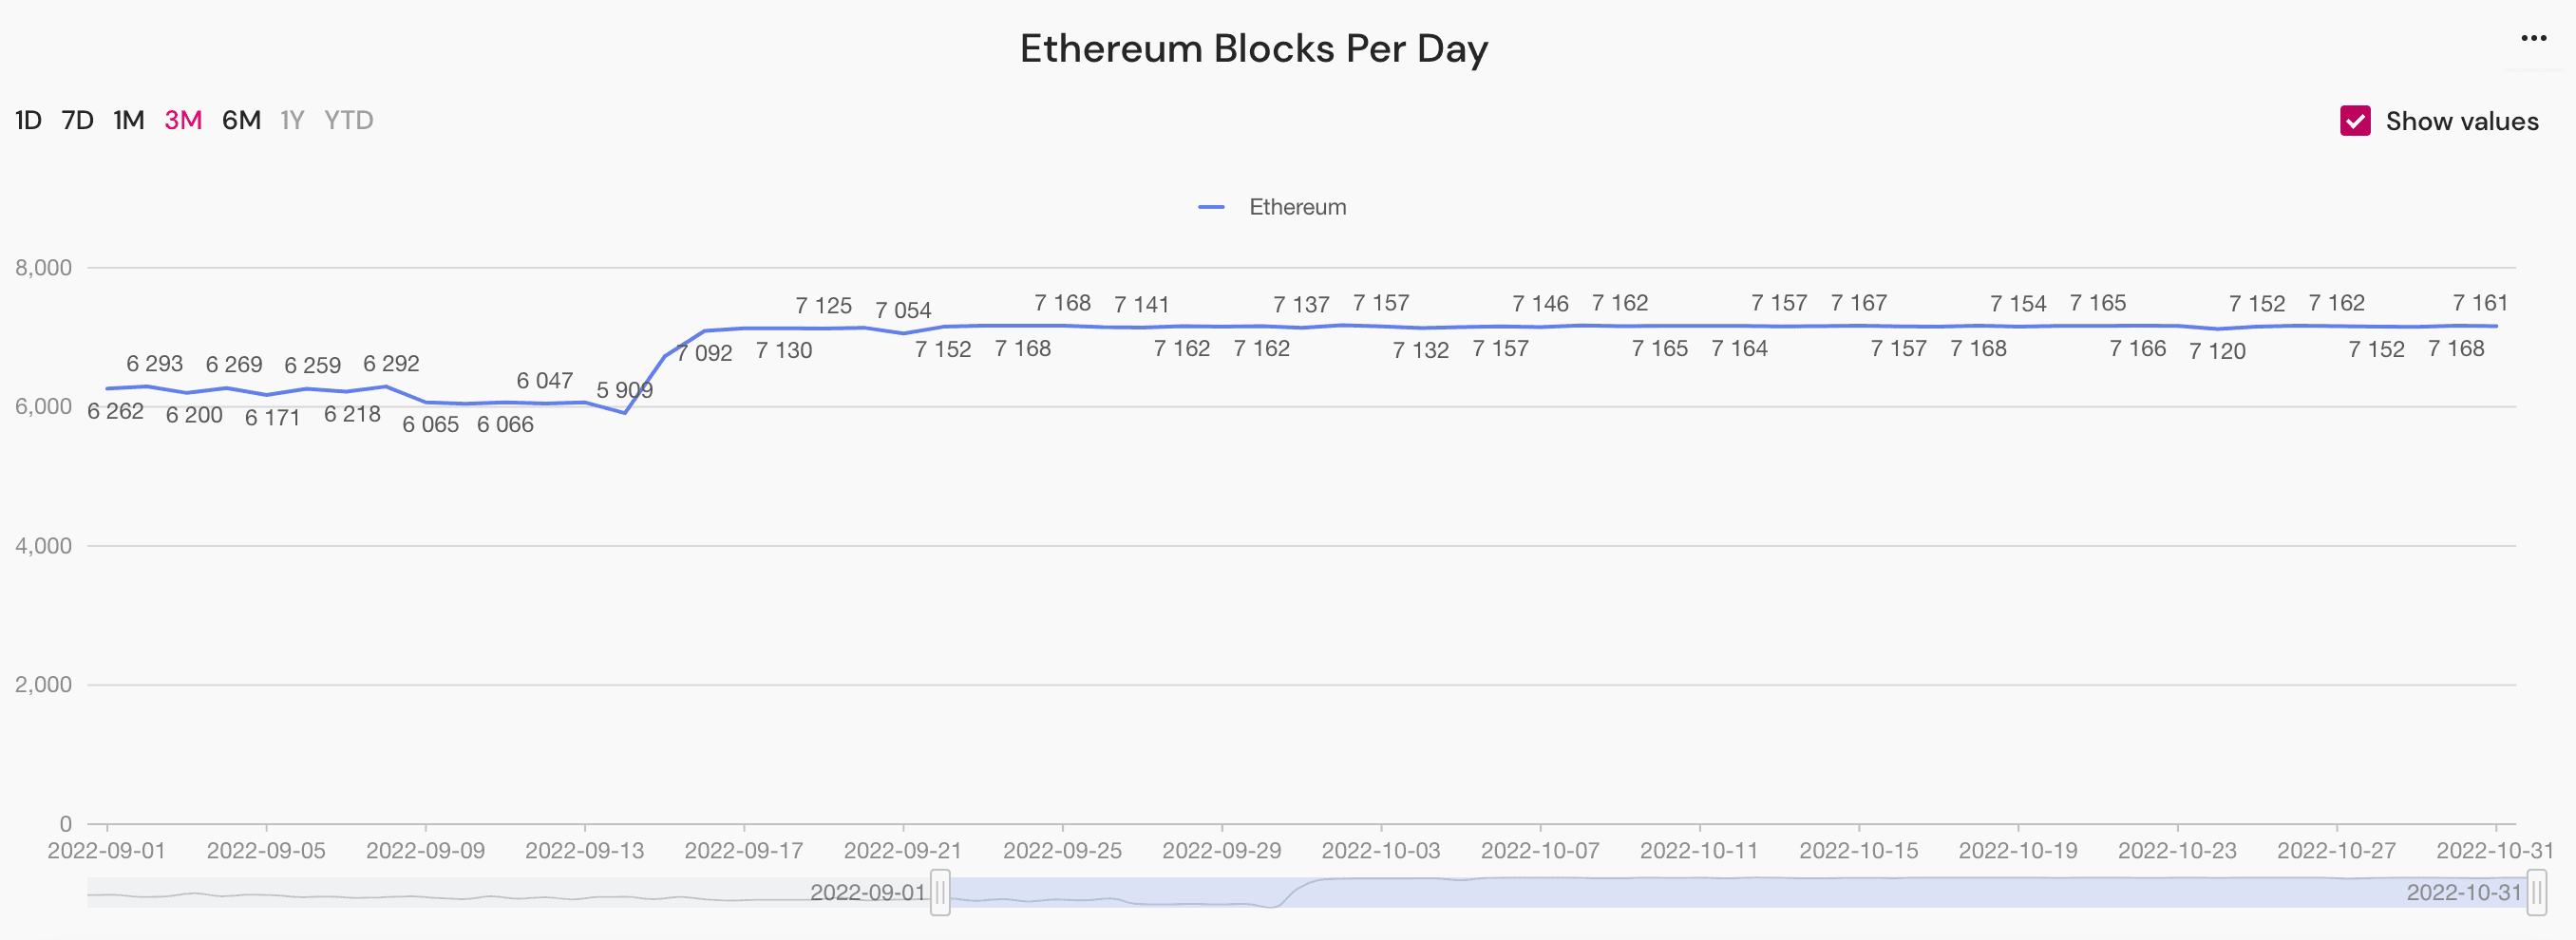 ethereum blocks per day in October 2022